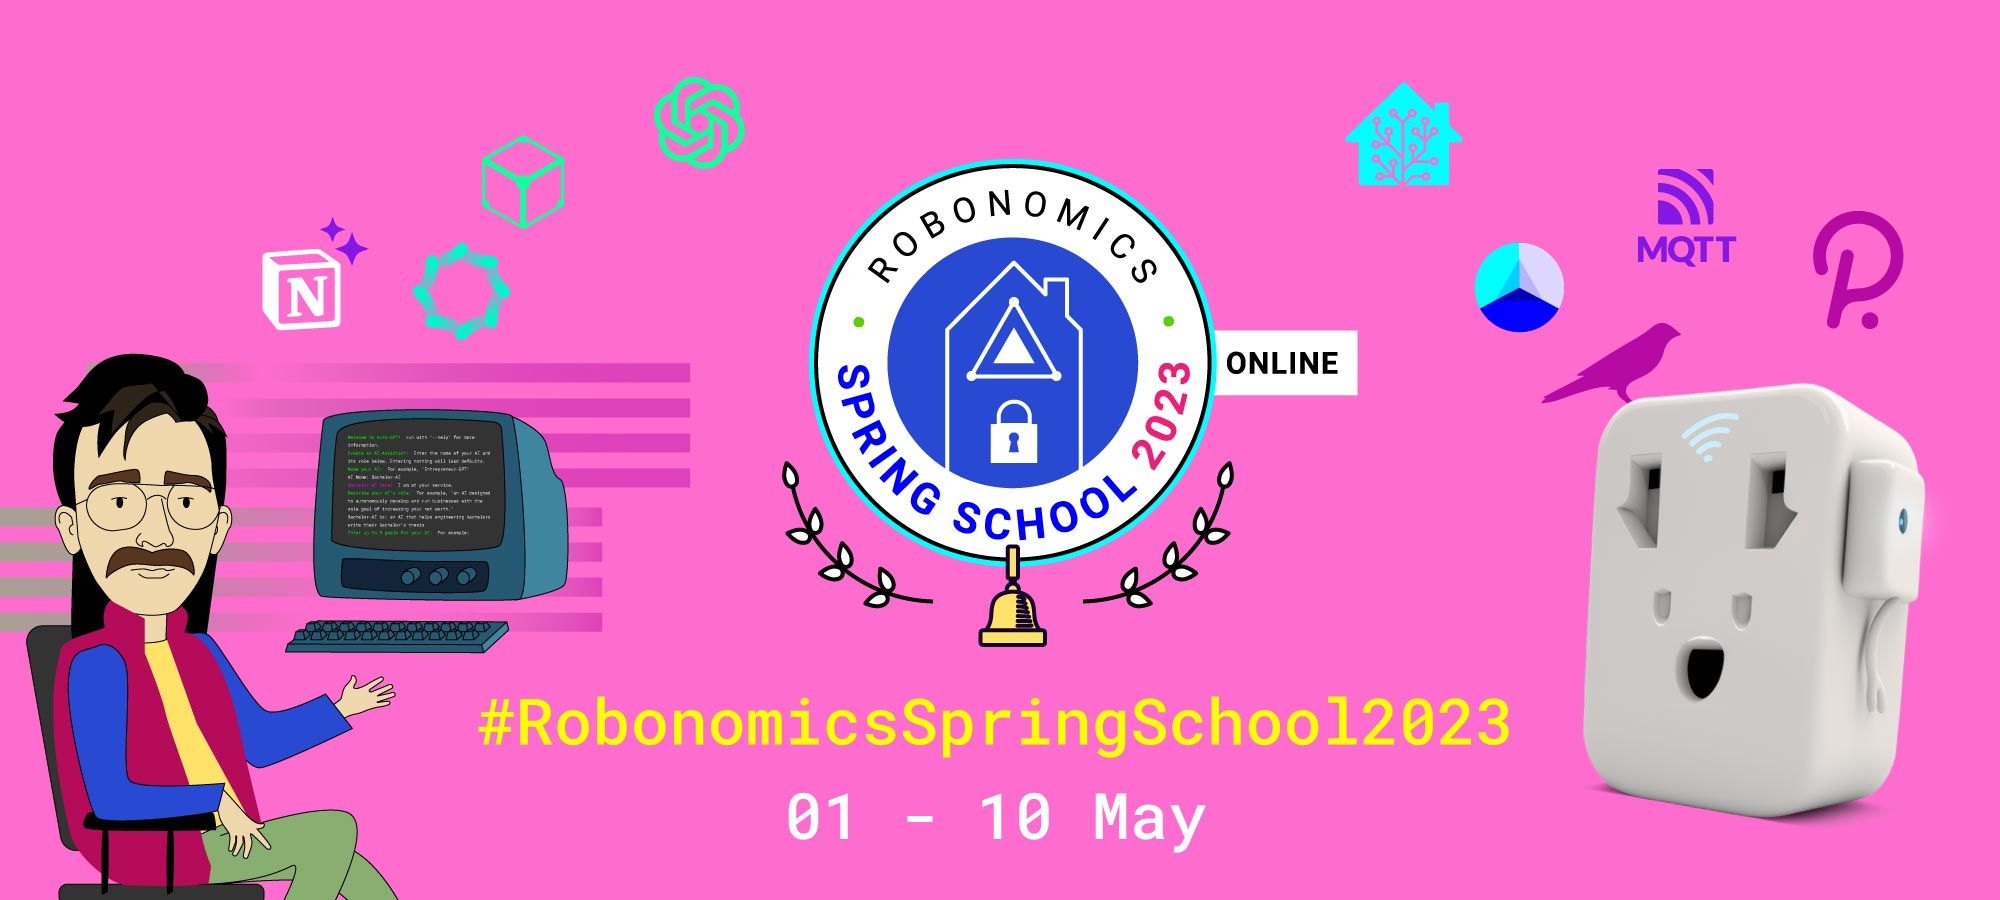 Robonomics Spring School 2023 Program